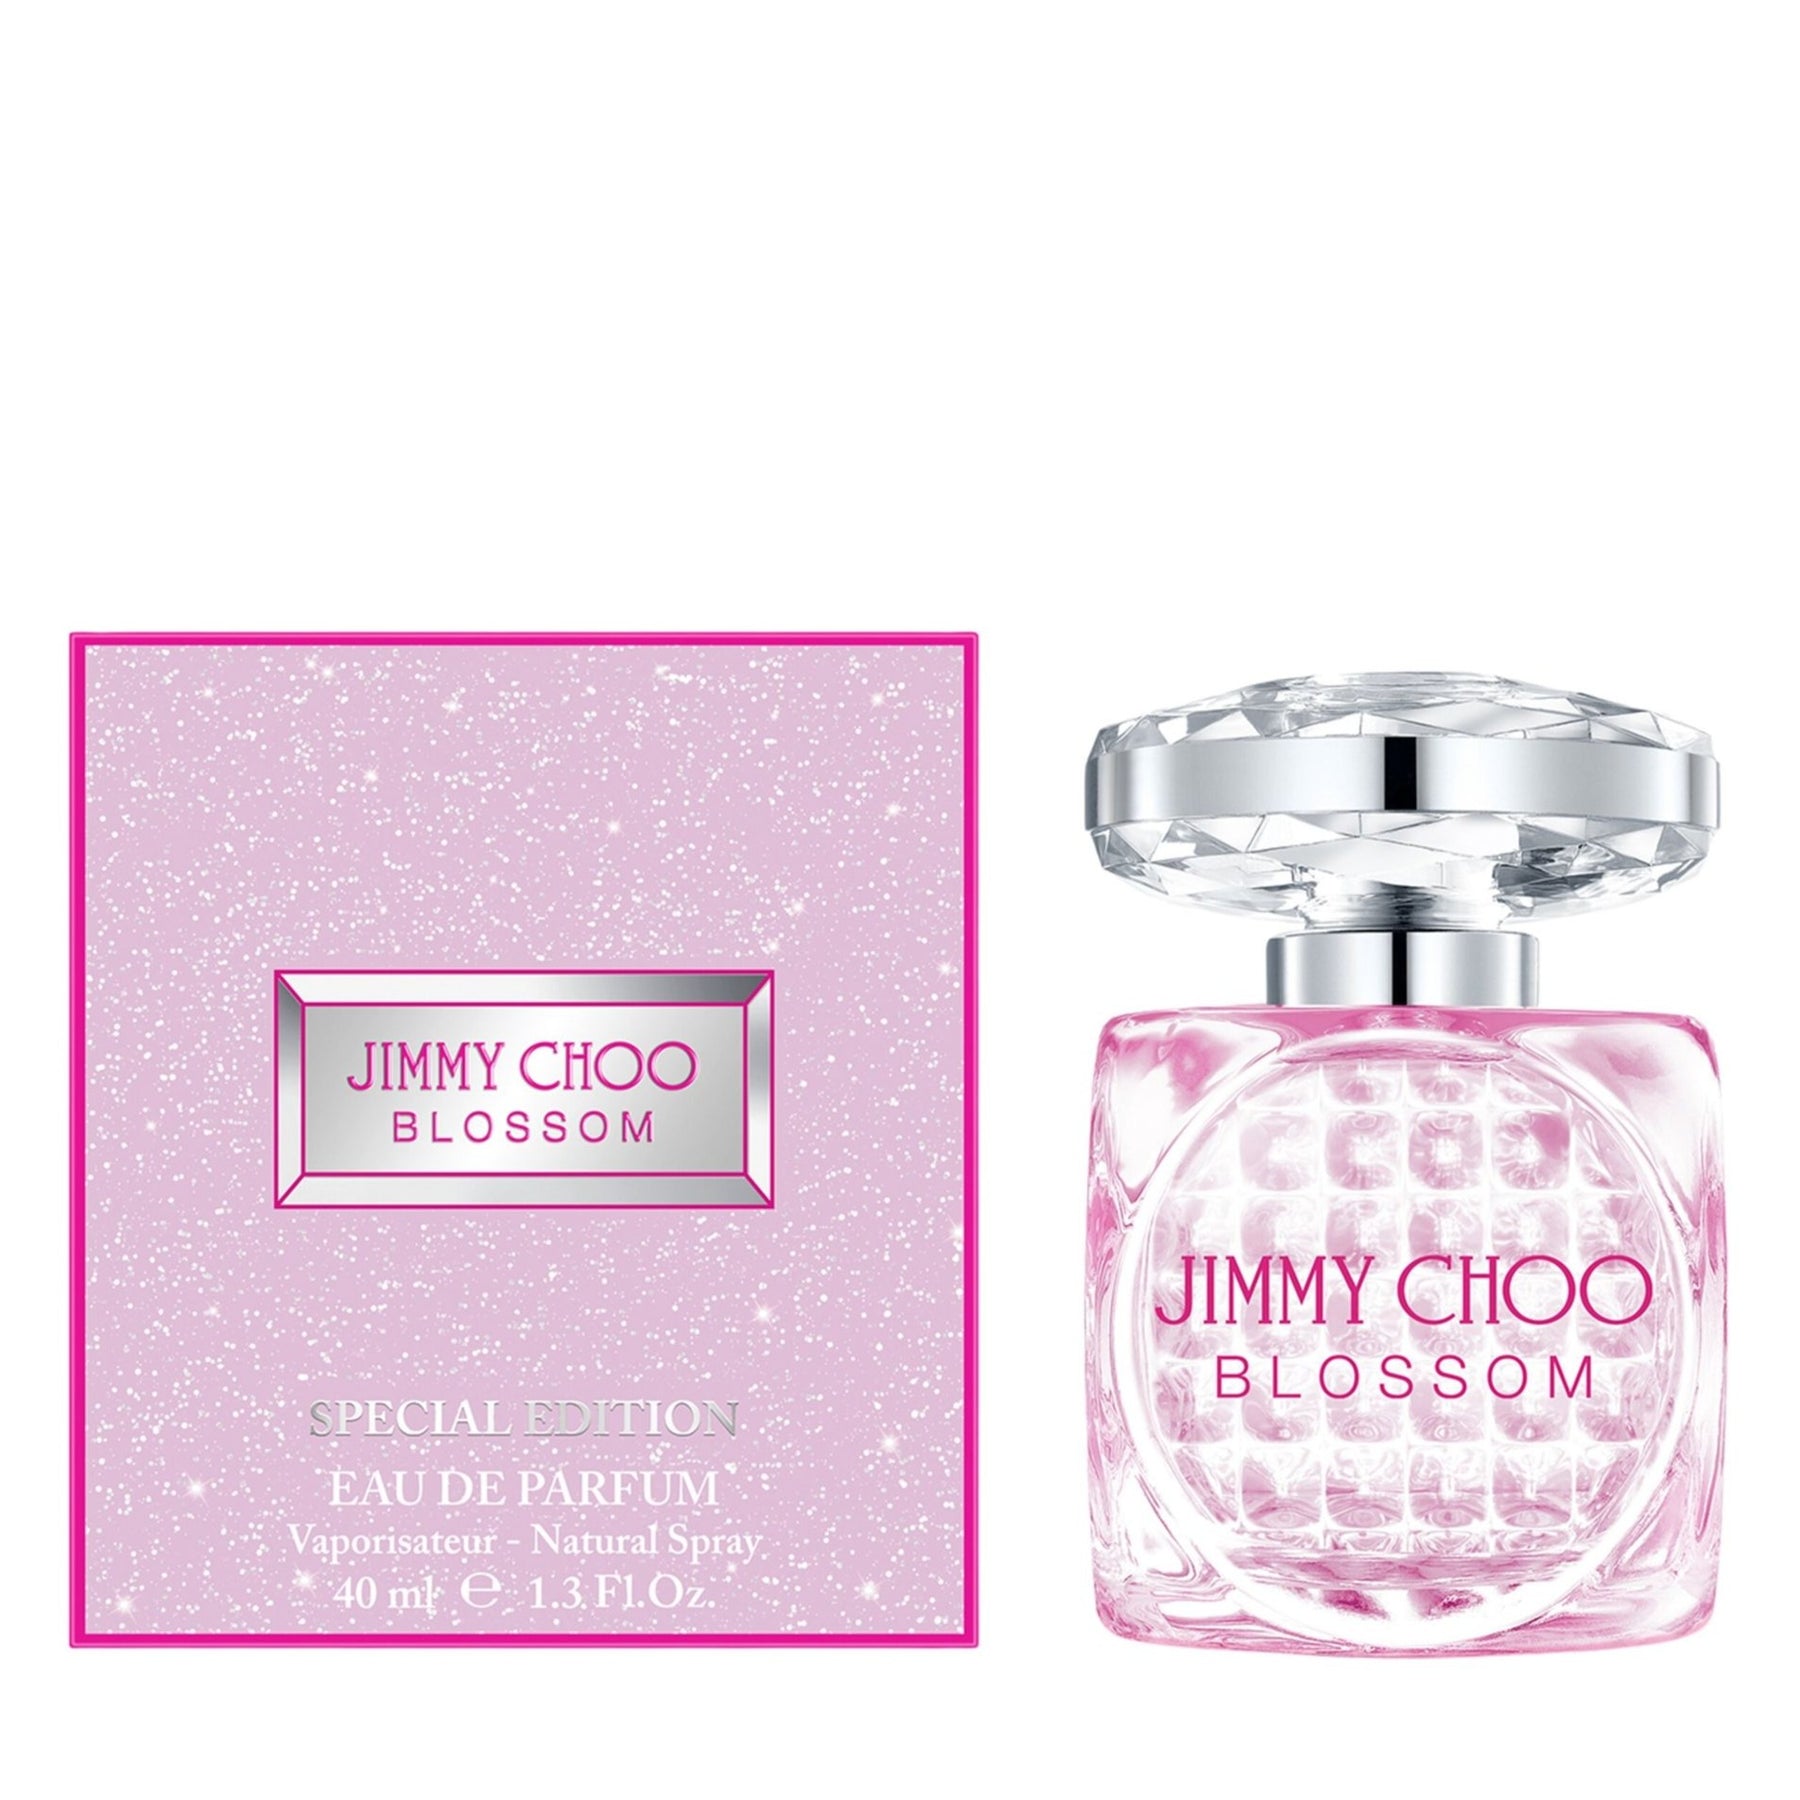 Jimmy Choo Blossom 2.0oz Eau de Parfum Spray Women